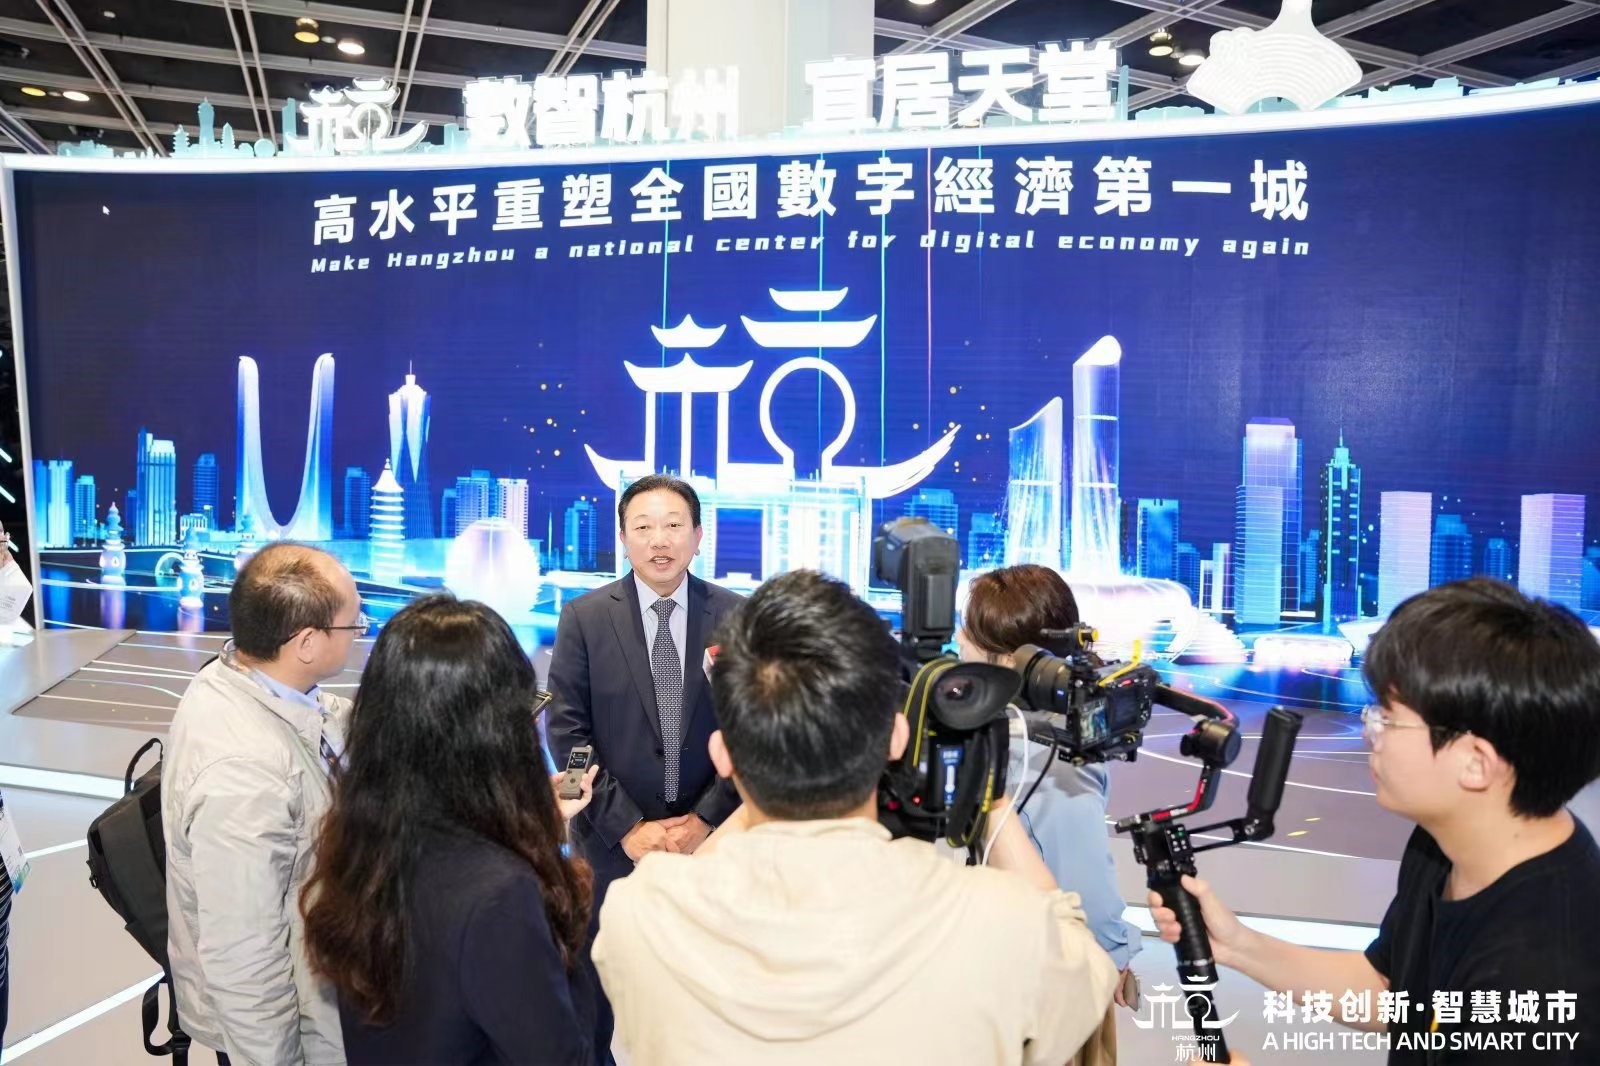 Pico and Hangzhou Expo Group signed strategic alliance